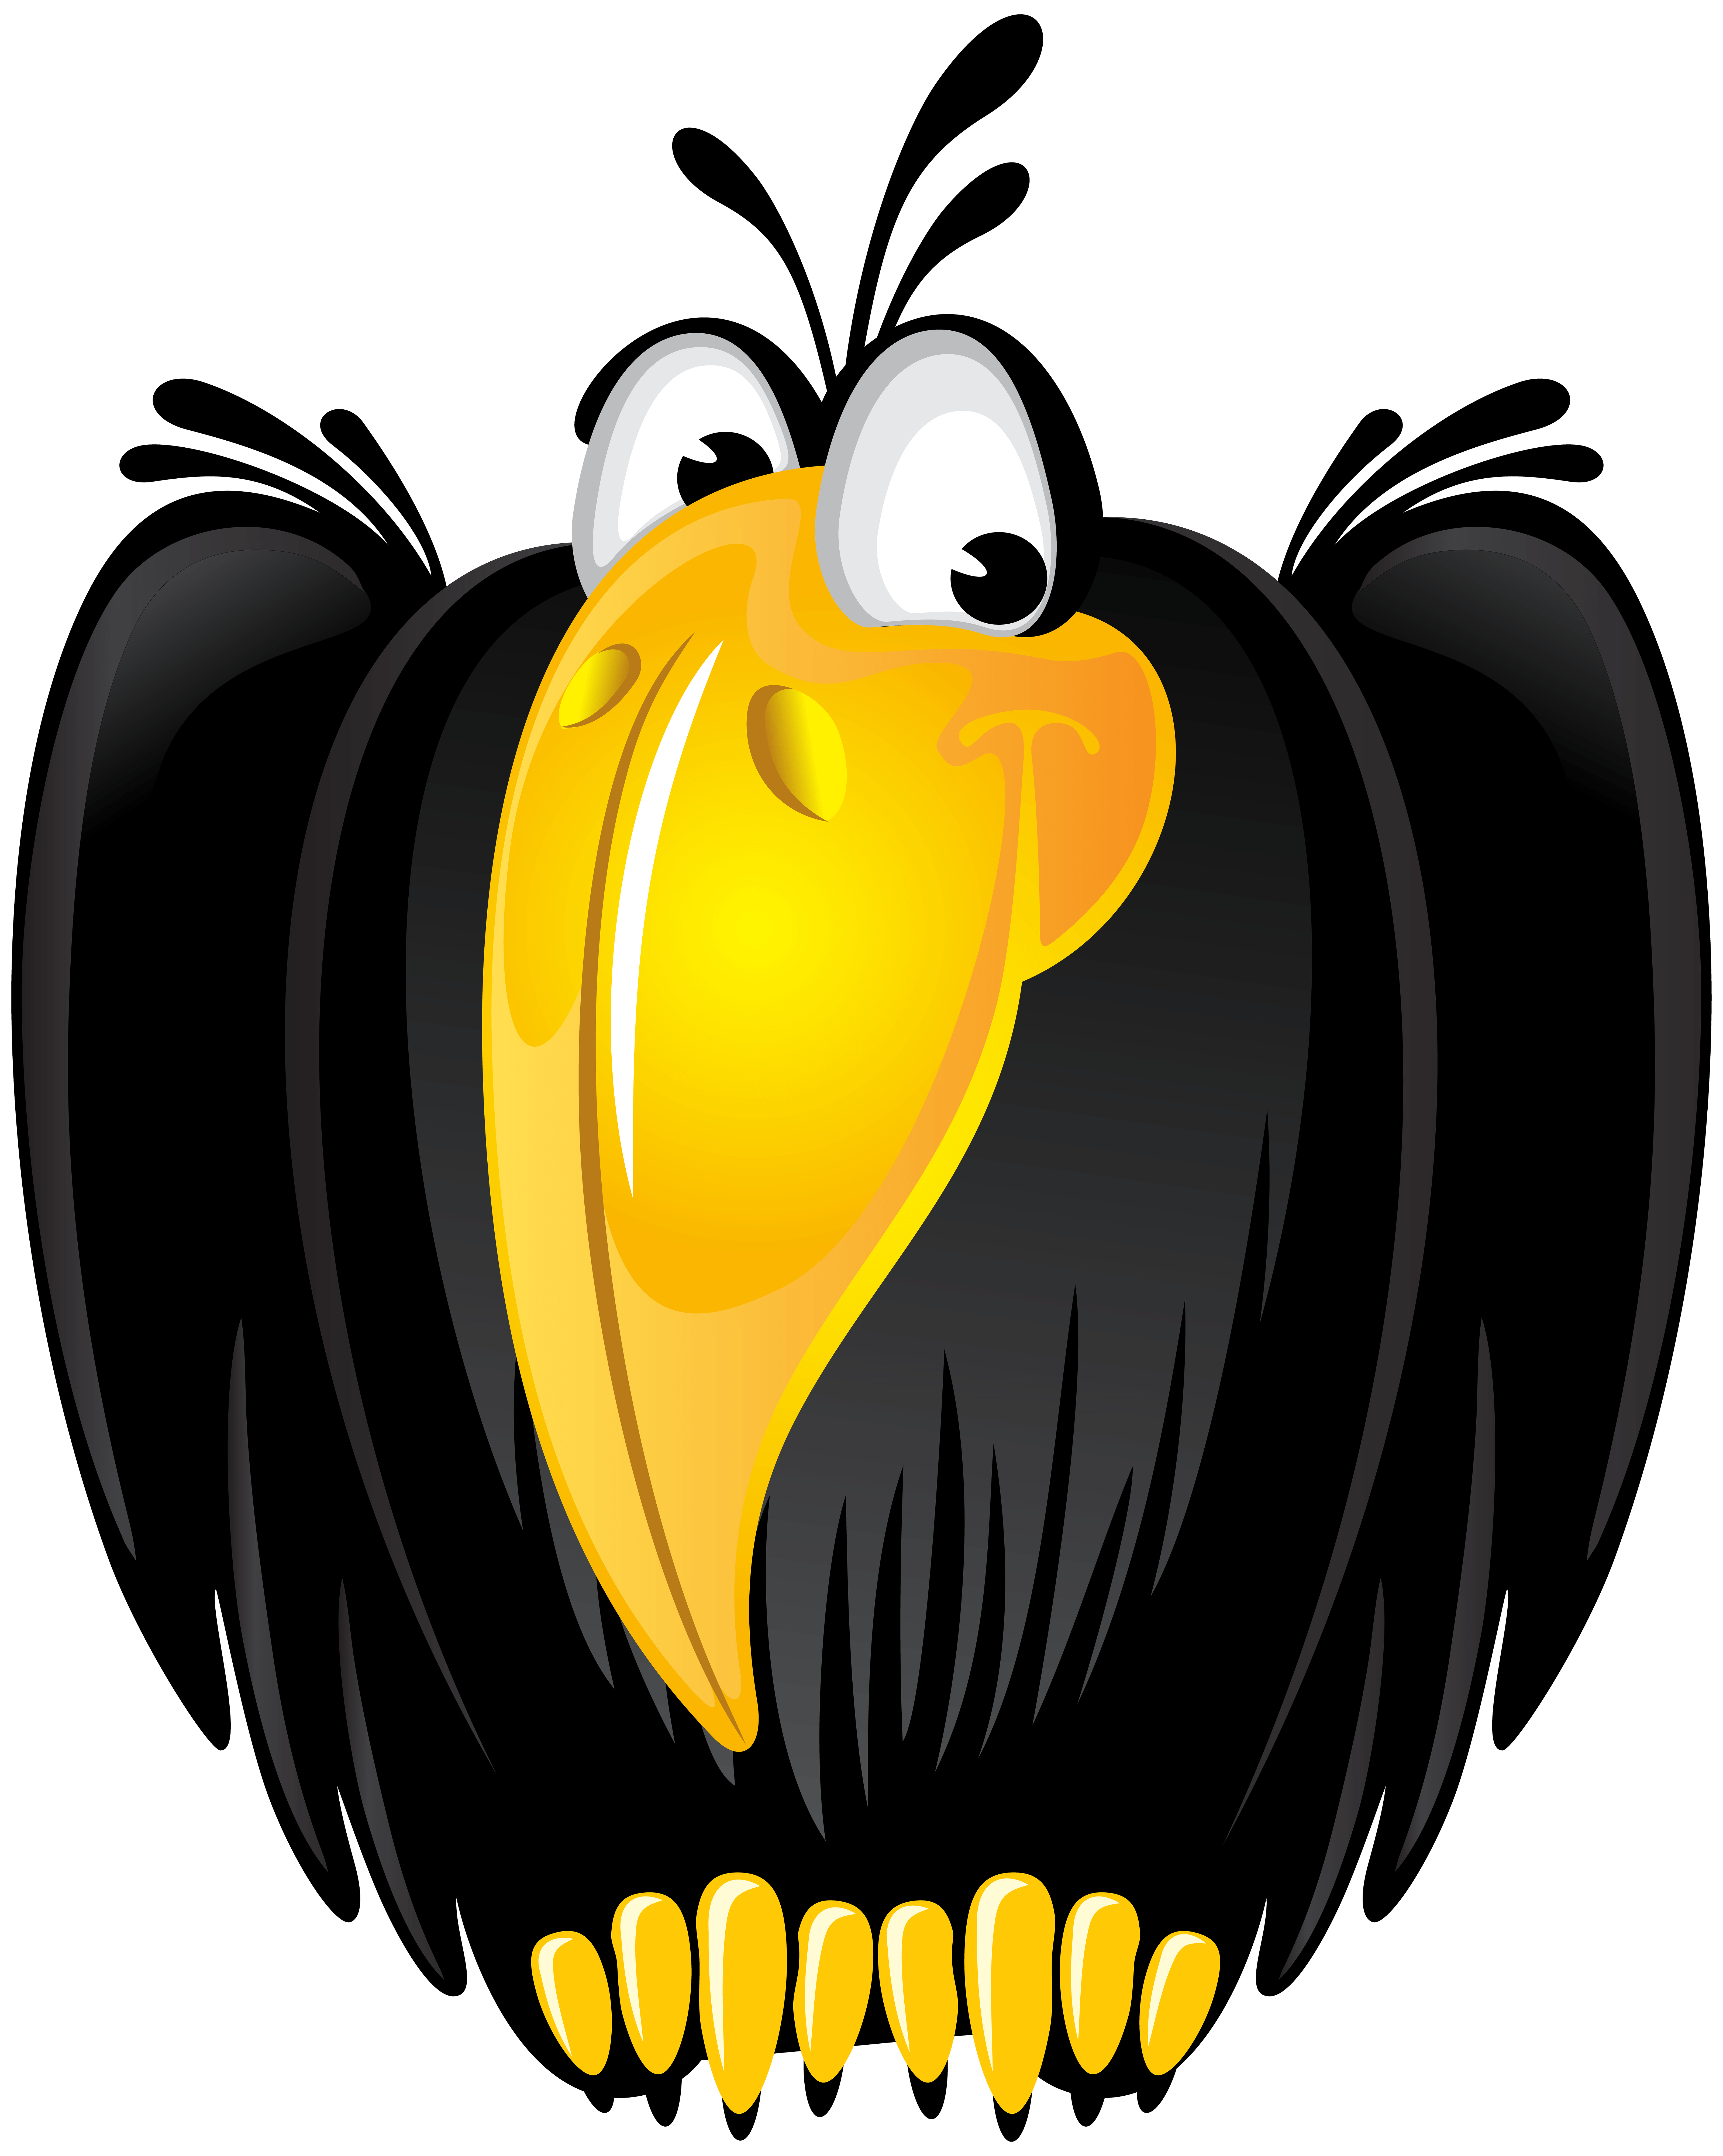 Cartoon Crow Logo - Crow Cartoon Transparent PNG Clip Art Image | Gallery Yopriceville ...